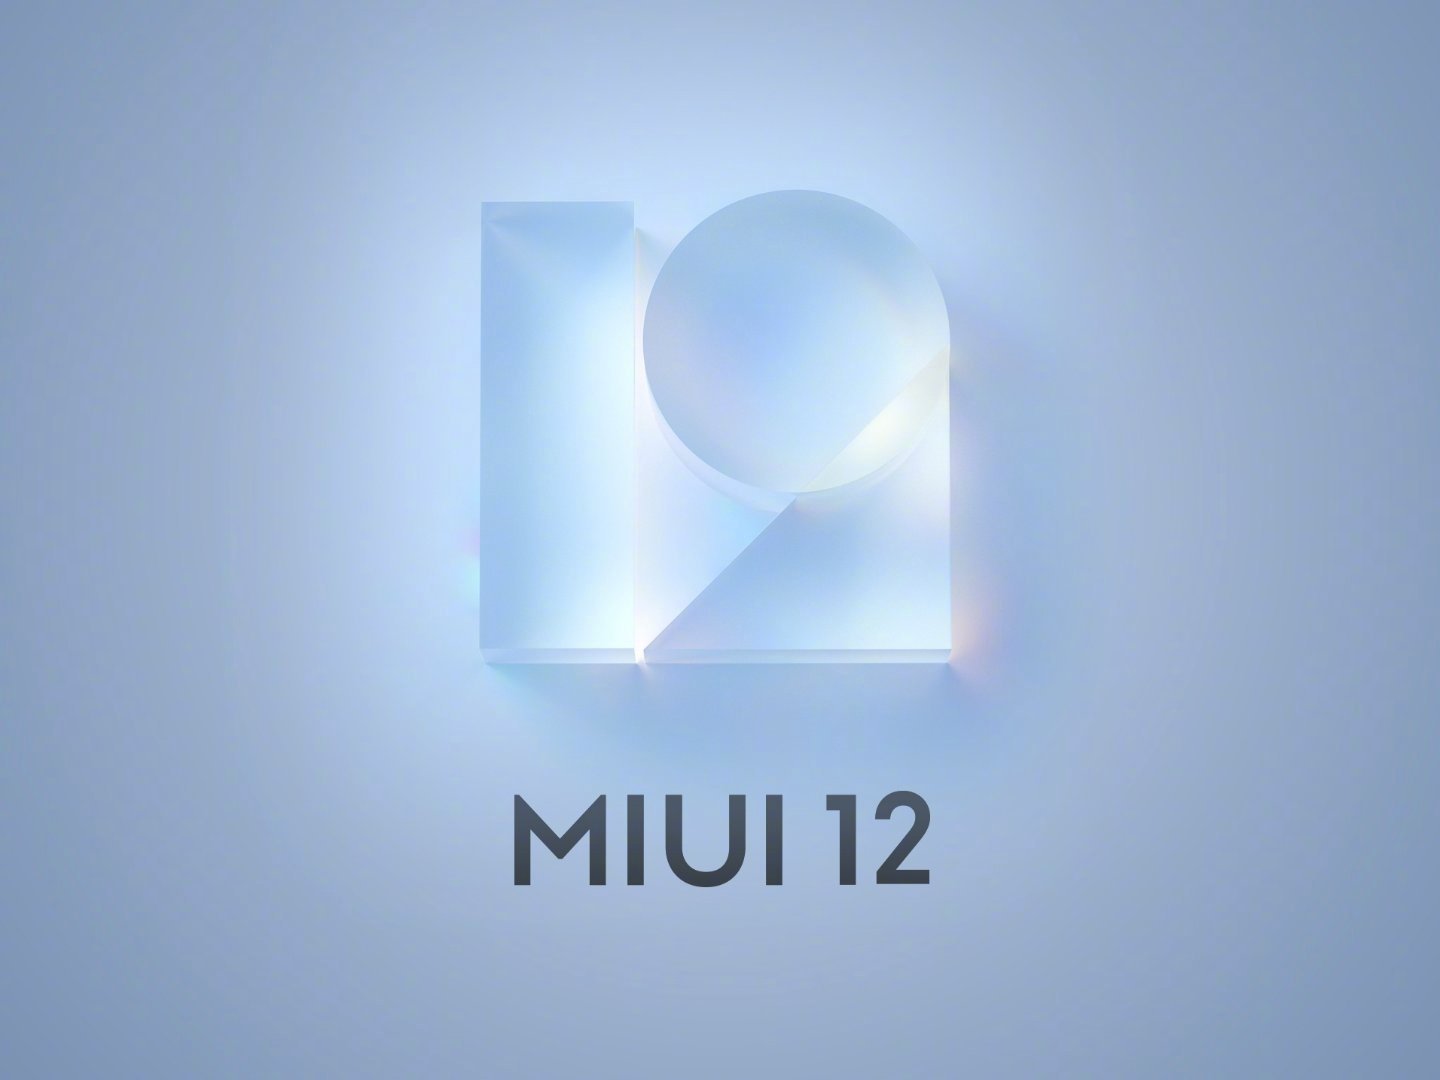 miui-12-logo.jpg